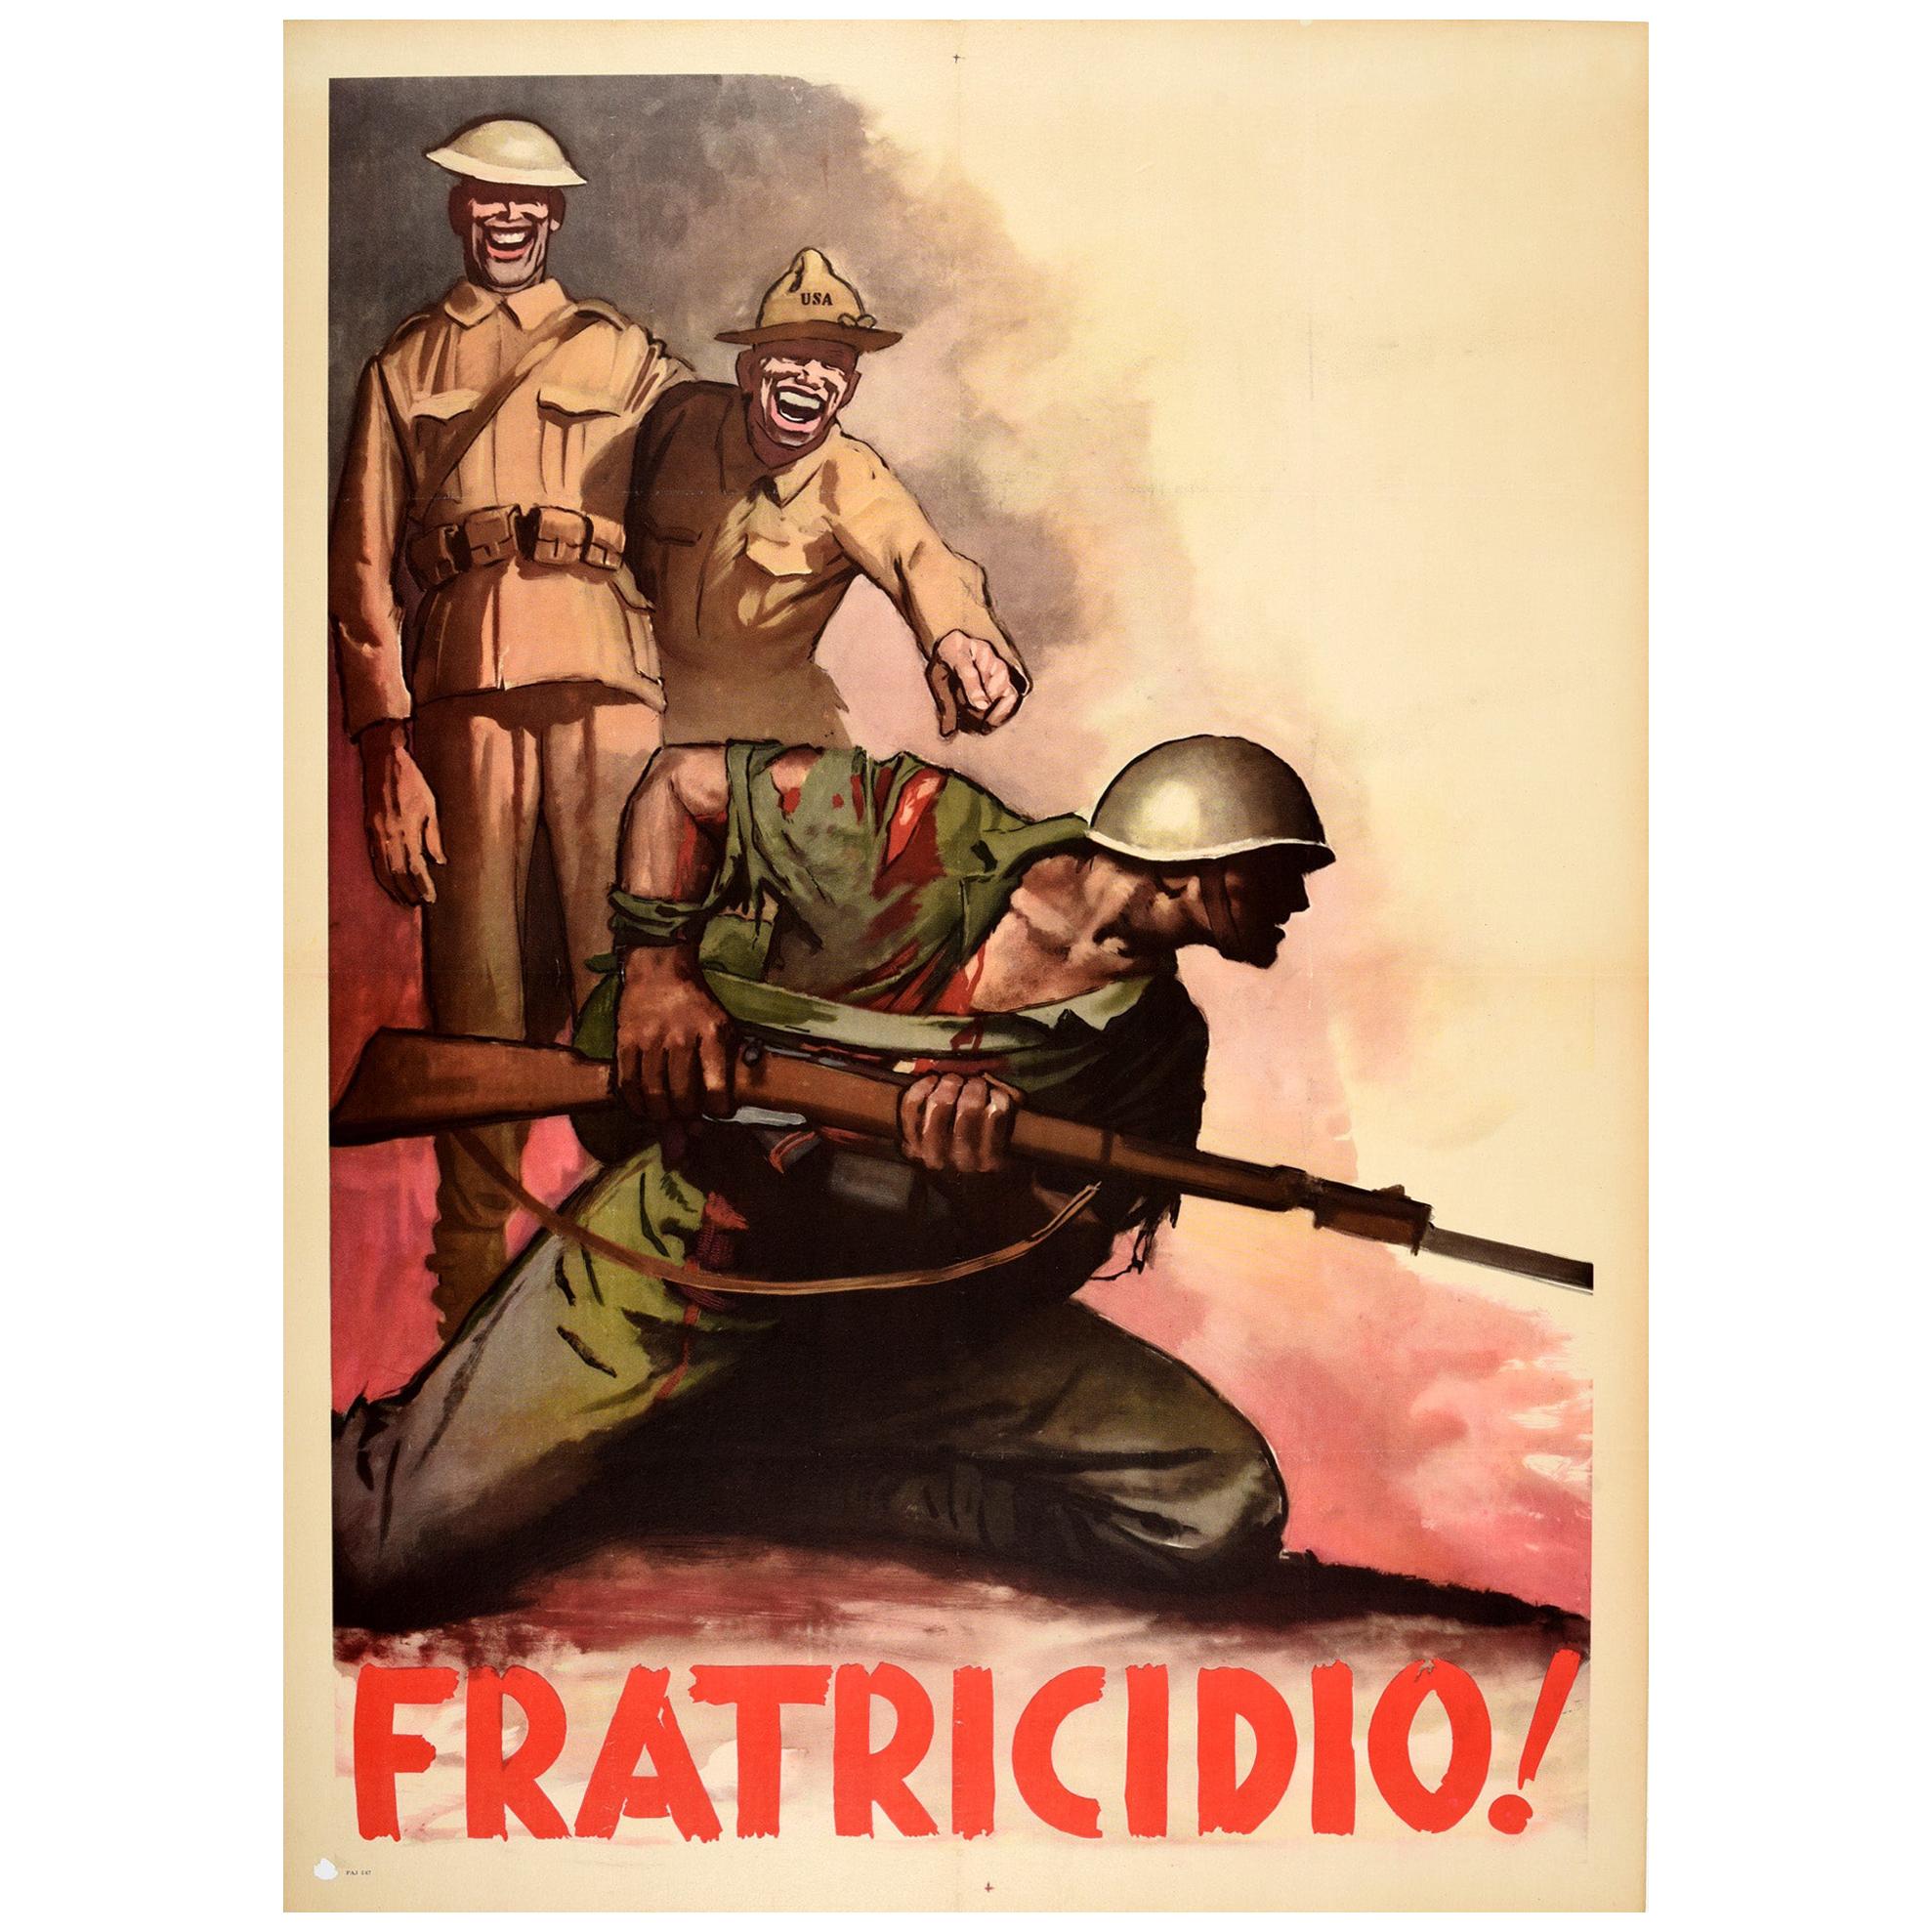 Original Vintage Poster Fratricidio Fratricide WWII Fascist War Propaganda Italy